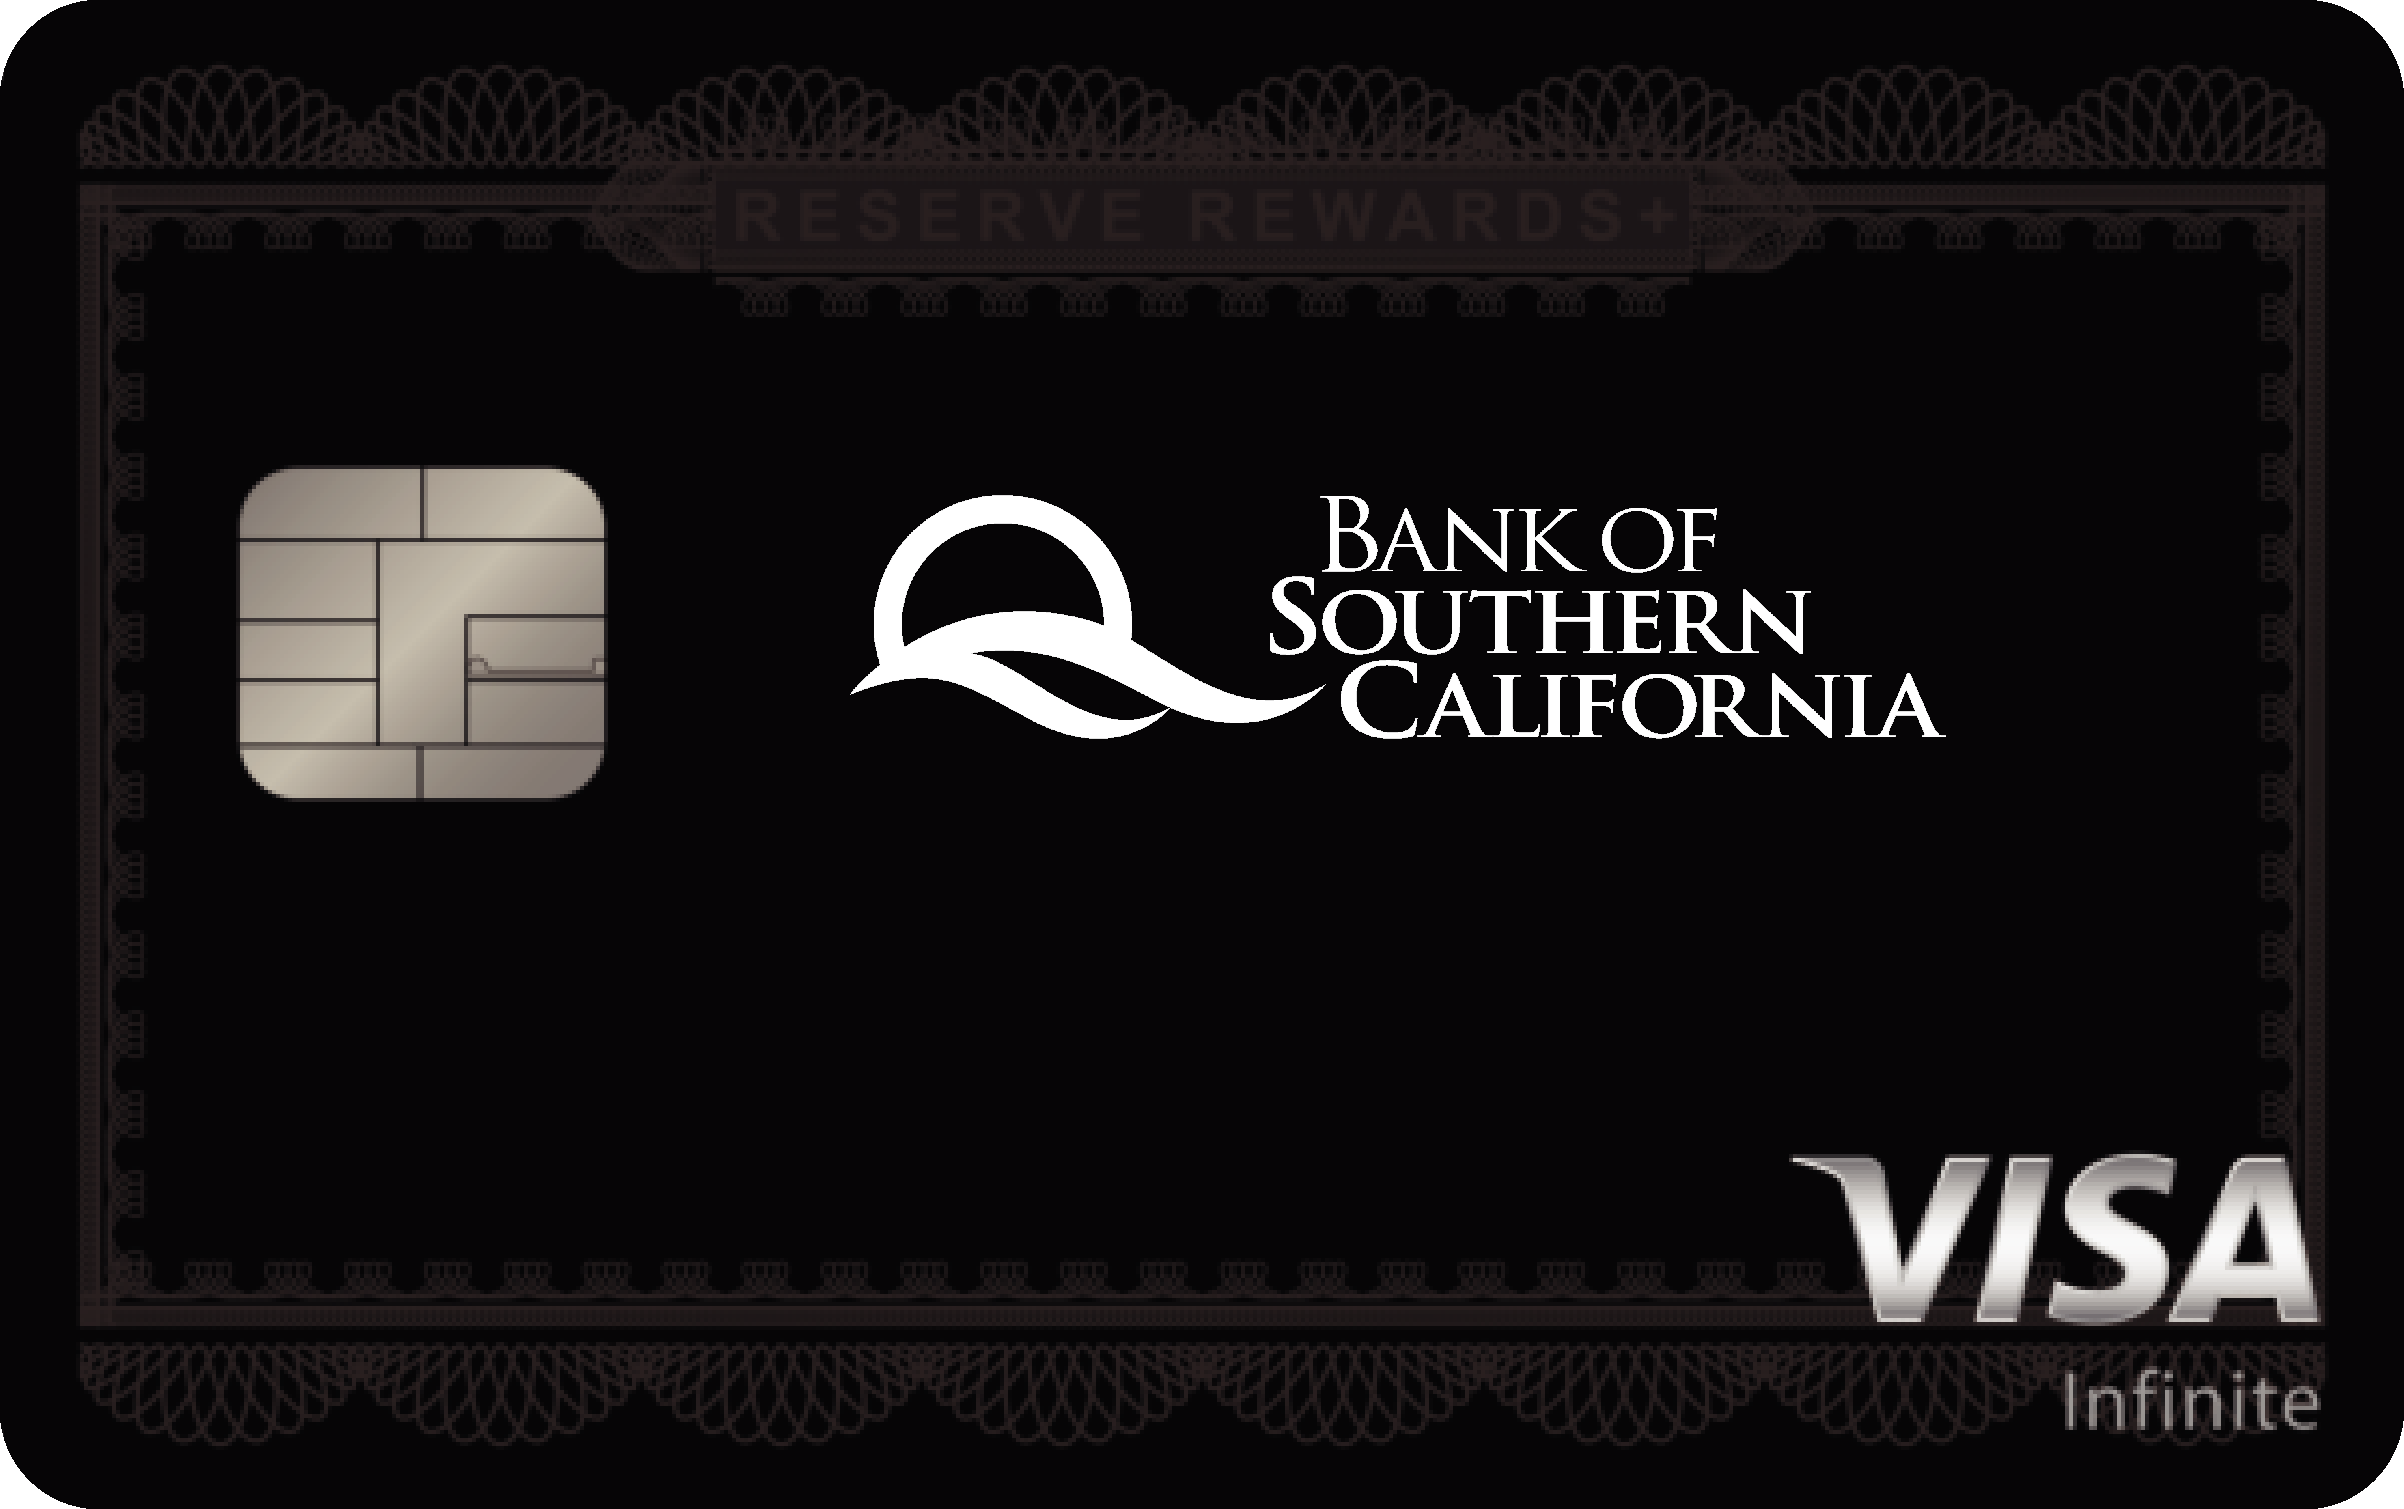 Bank of Southern California